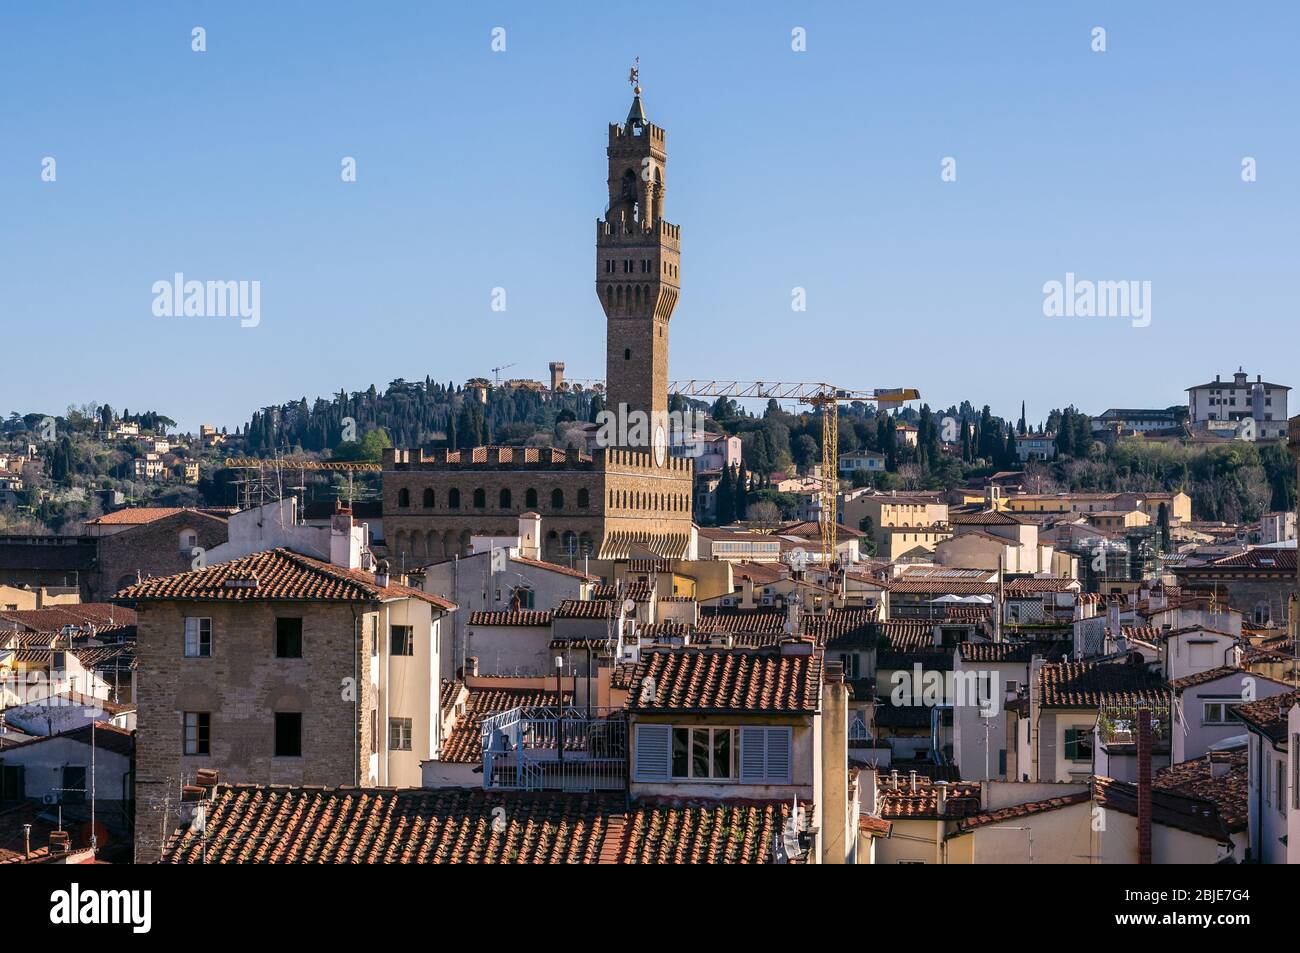 Berühmten Turm des Palazzo Vecchio und Palazzo della Signoria (Altes Schloss). Luftaufnahme von Giottos Campanile. Florenz, Toskana, Italien. Stockfoto